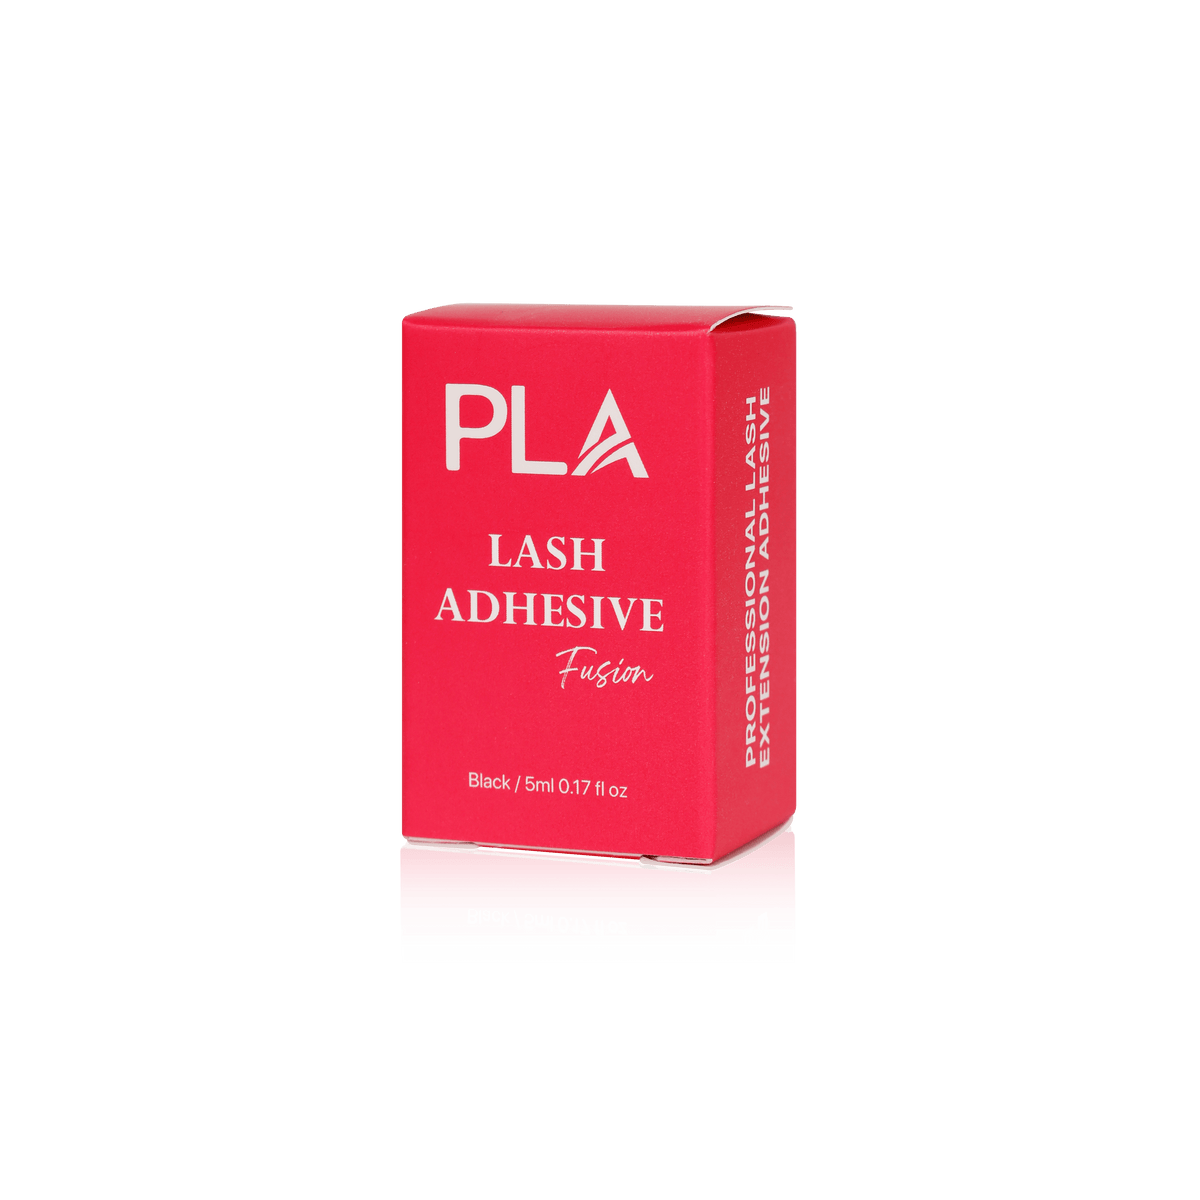 PLA Fusion Adhesive – Paris Lash Academy